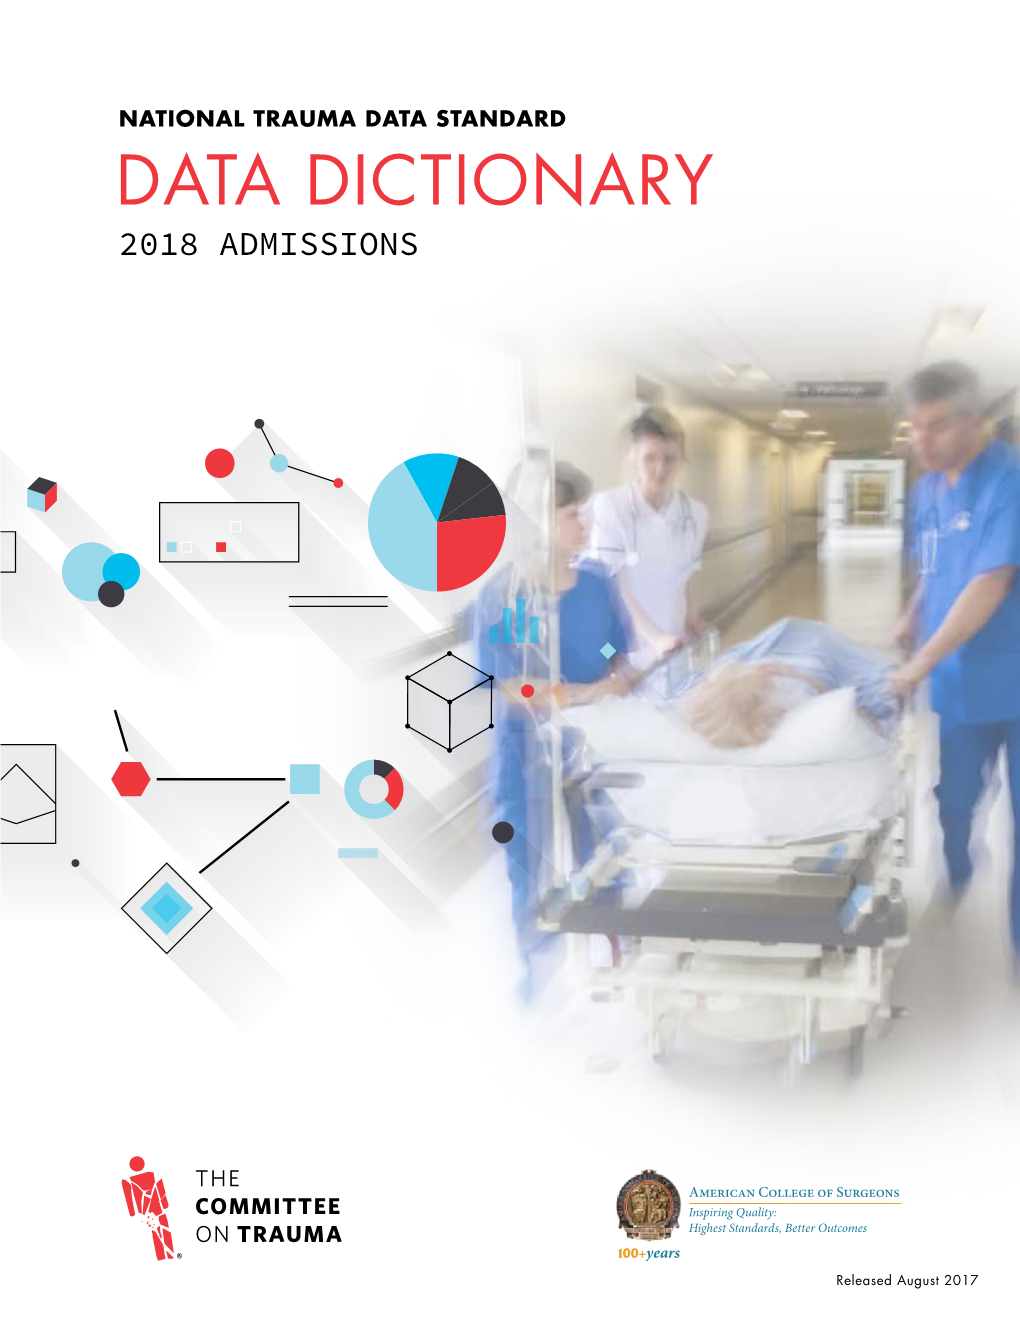 NTDS Data Dictionary 2018